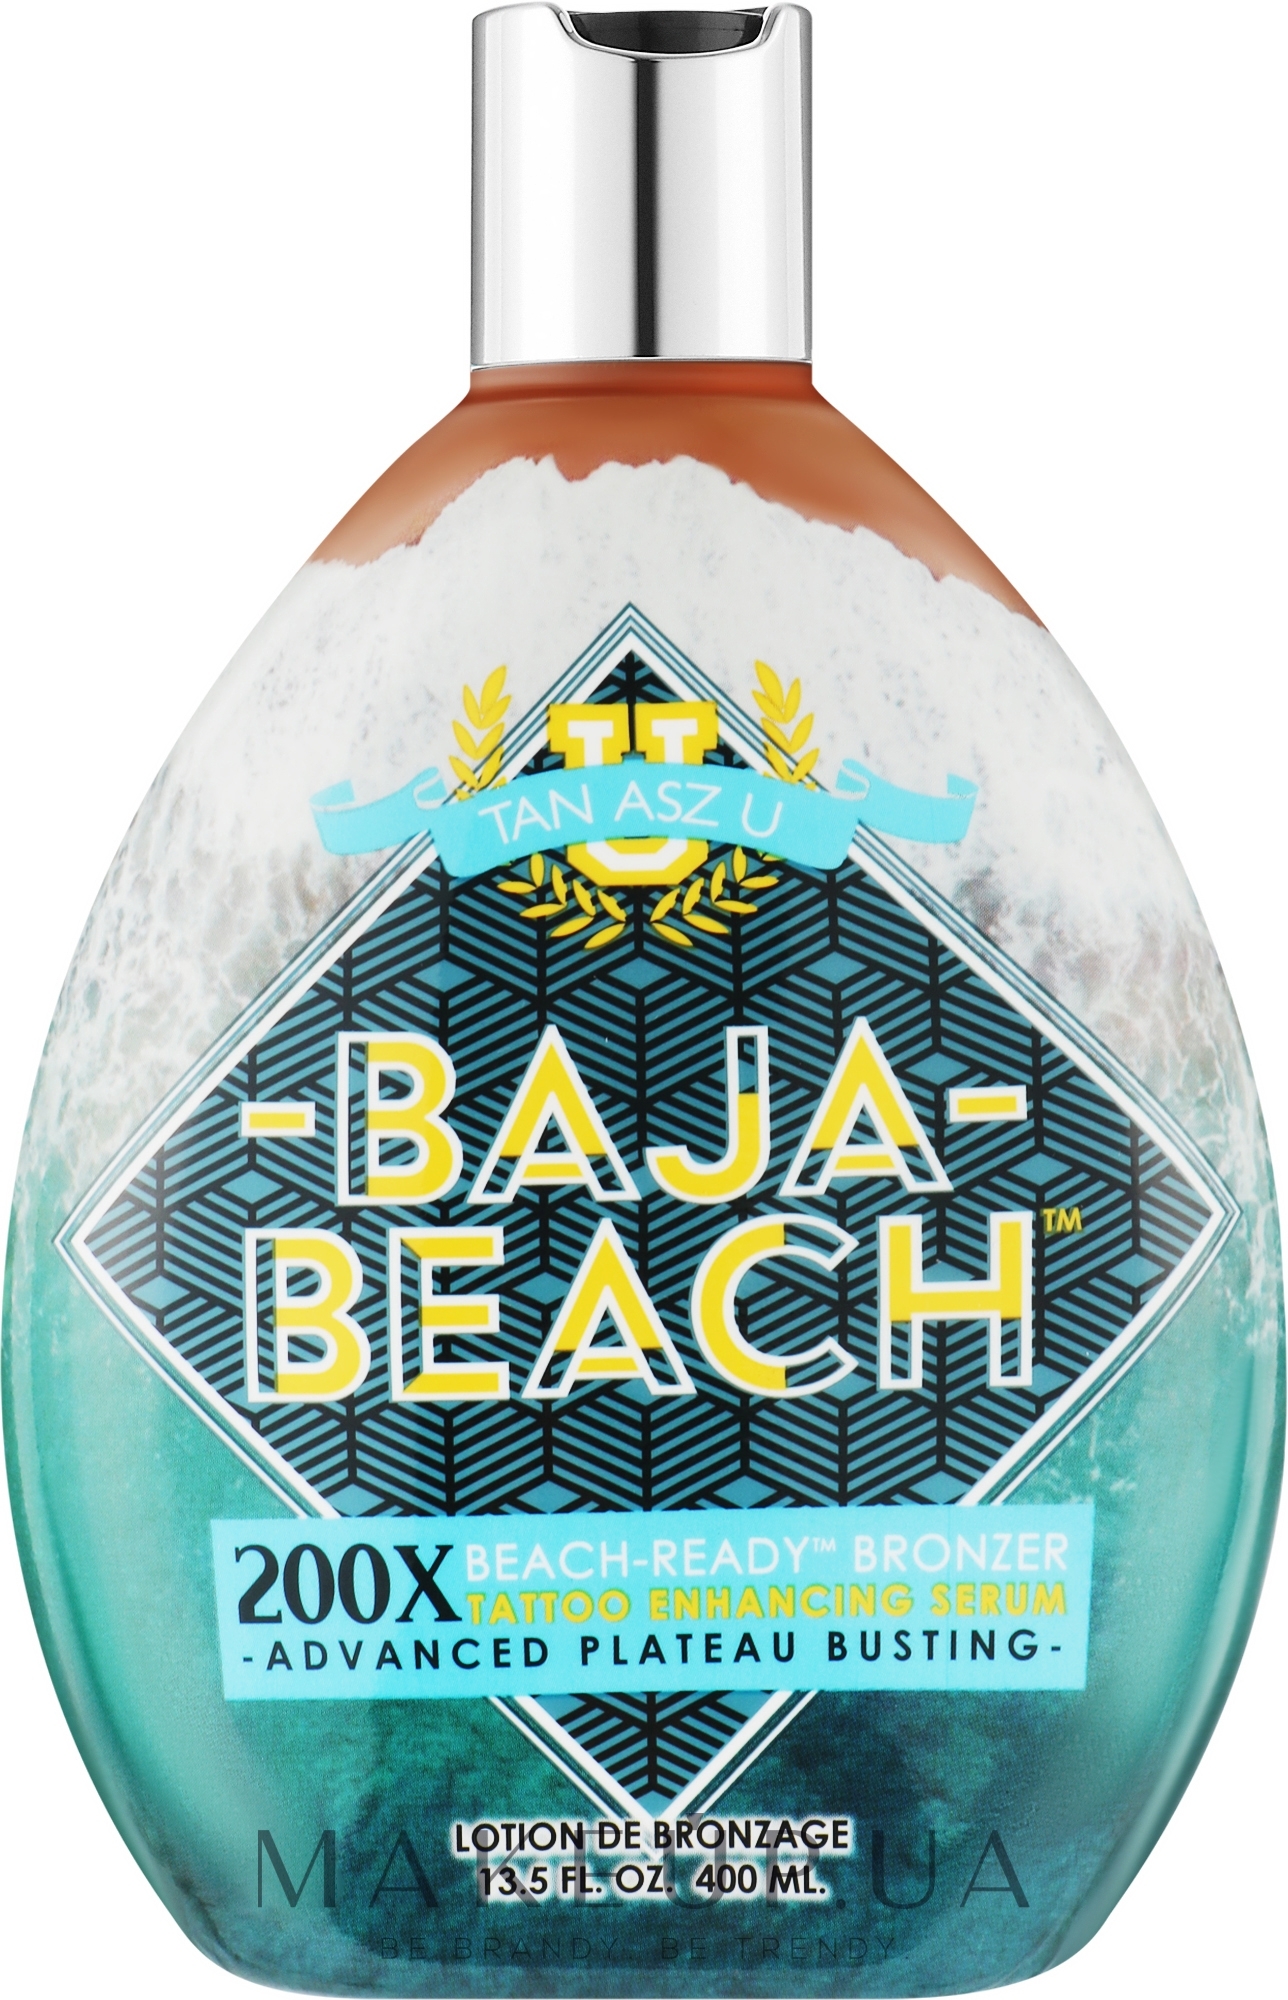 Крем для солярия с бронзантами и защитой татту - Tan Asz U Baja Beach 200X Beach-Ready Bronzer — фото 400ml